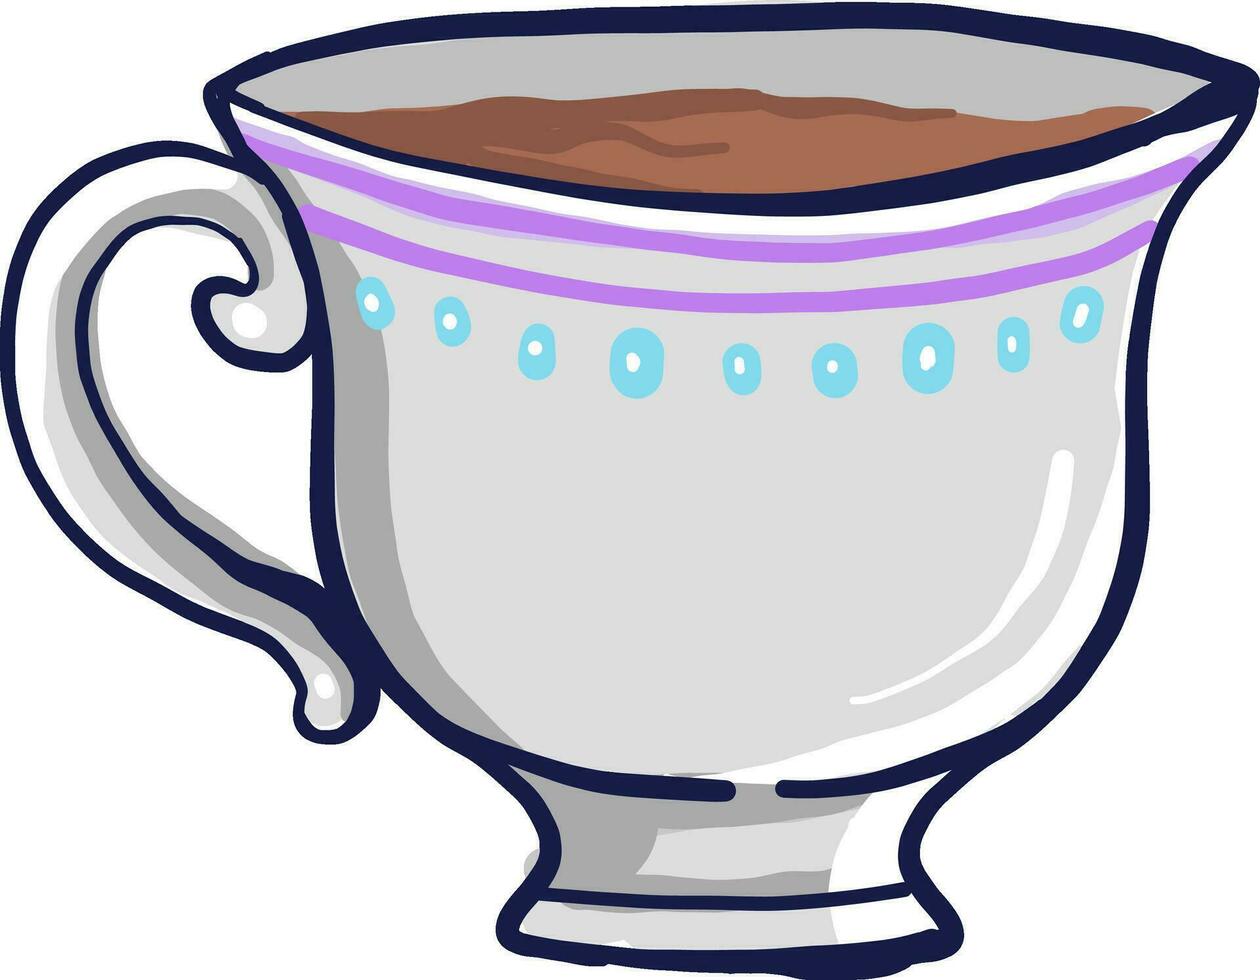 taza de café, ilustración, vector sobre fondo blanco